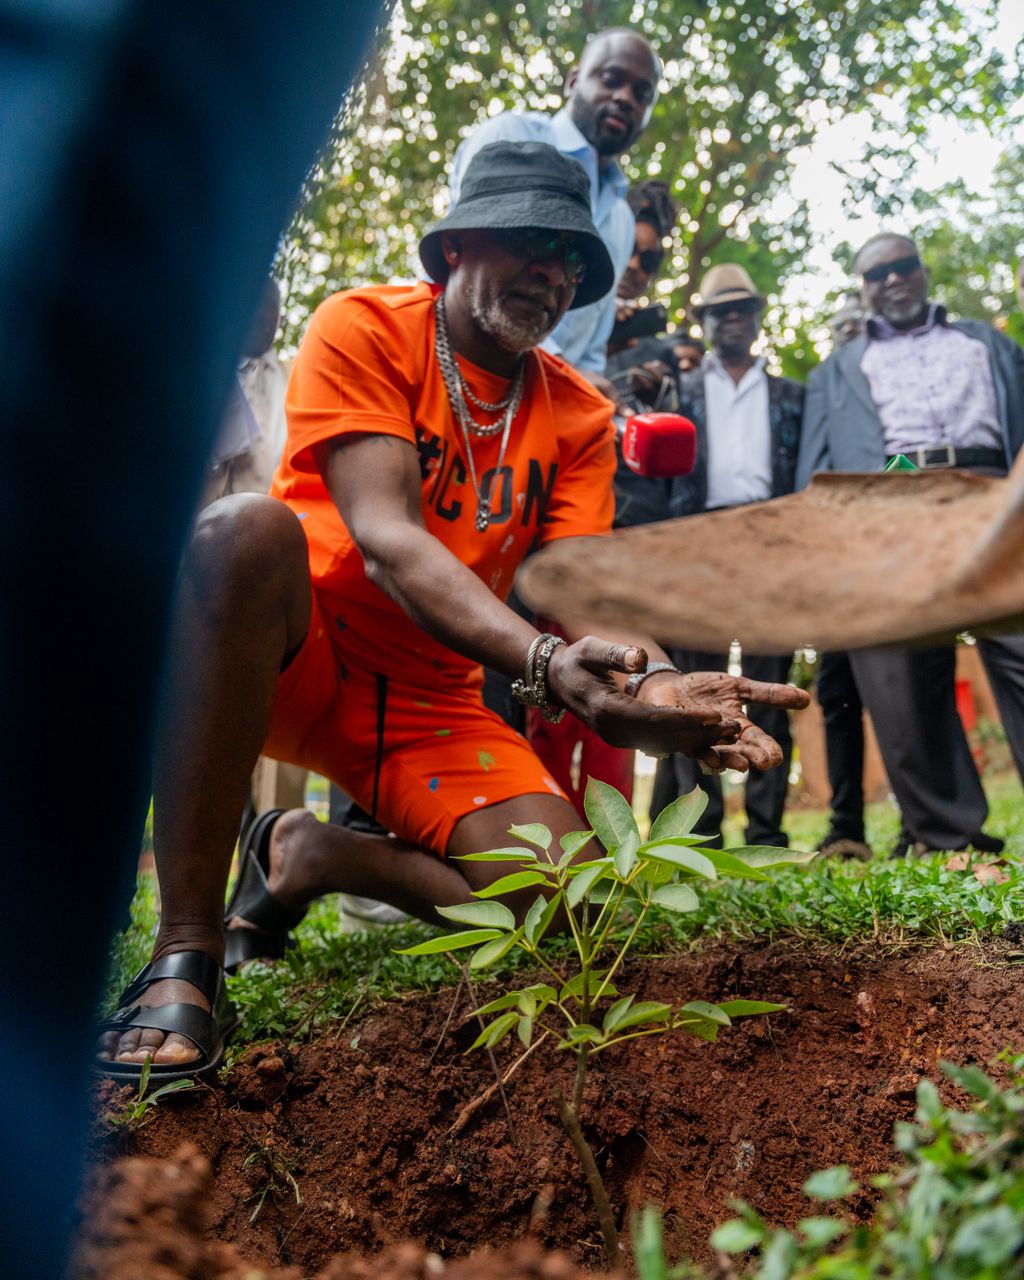 Awilo Longomba joined Stanbic Bank and Afrigo Band to plant trees